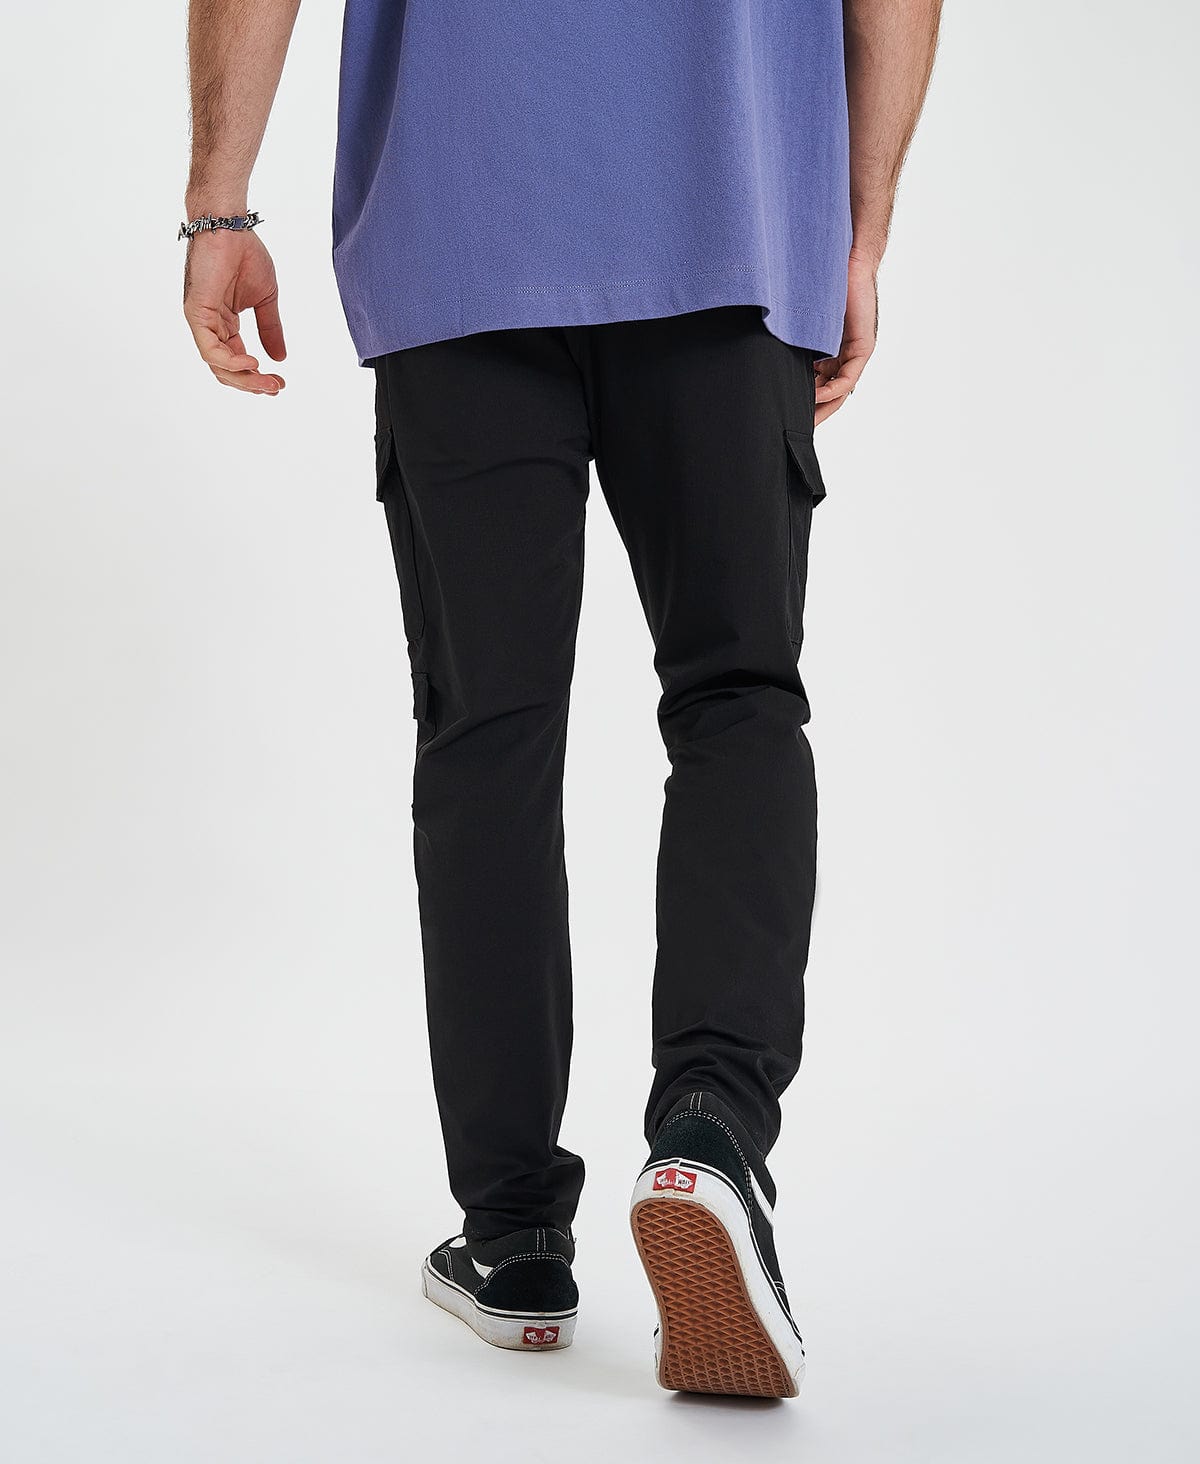 Cargo Pants for Men Men's Side Pocket Trousers with Zipper Placket Skinny  Jeans Men's Pants Black Joggers for Men Black S - Walmart.com